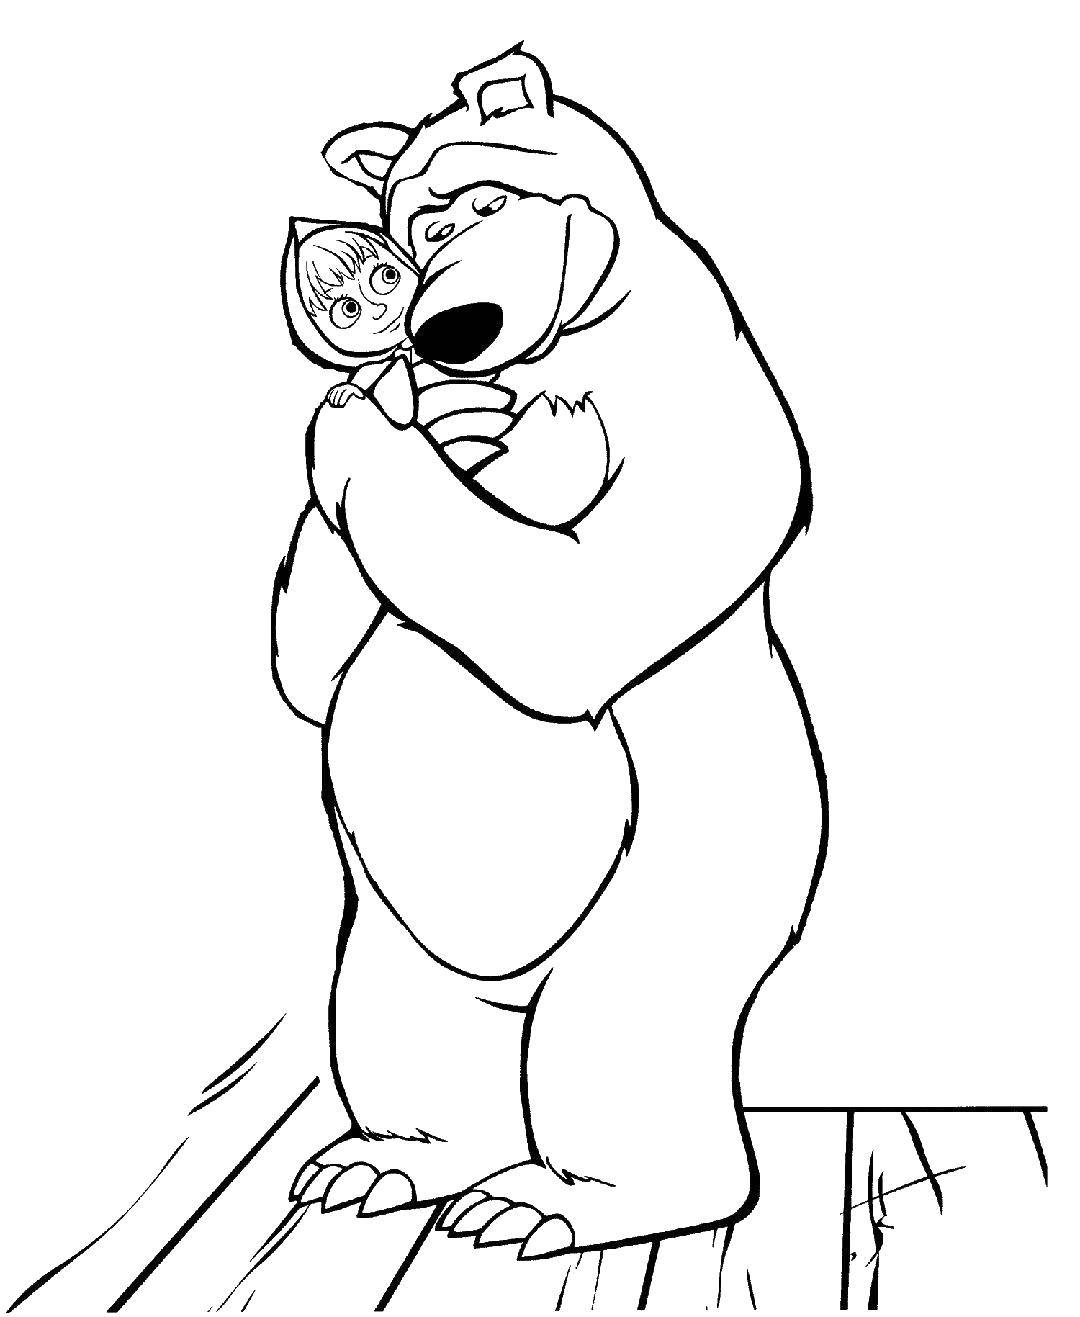 Coloring Masha and the bear. Category Cartoon character. Tags:  Cartoon character, Masha and the Bear.